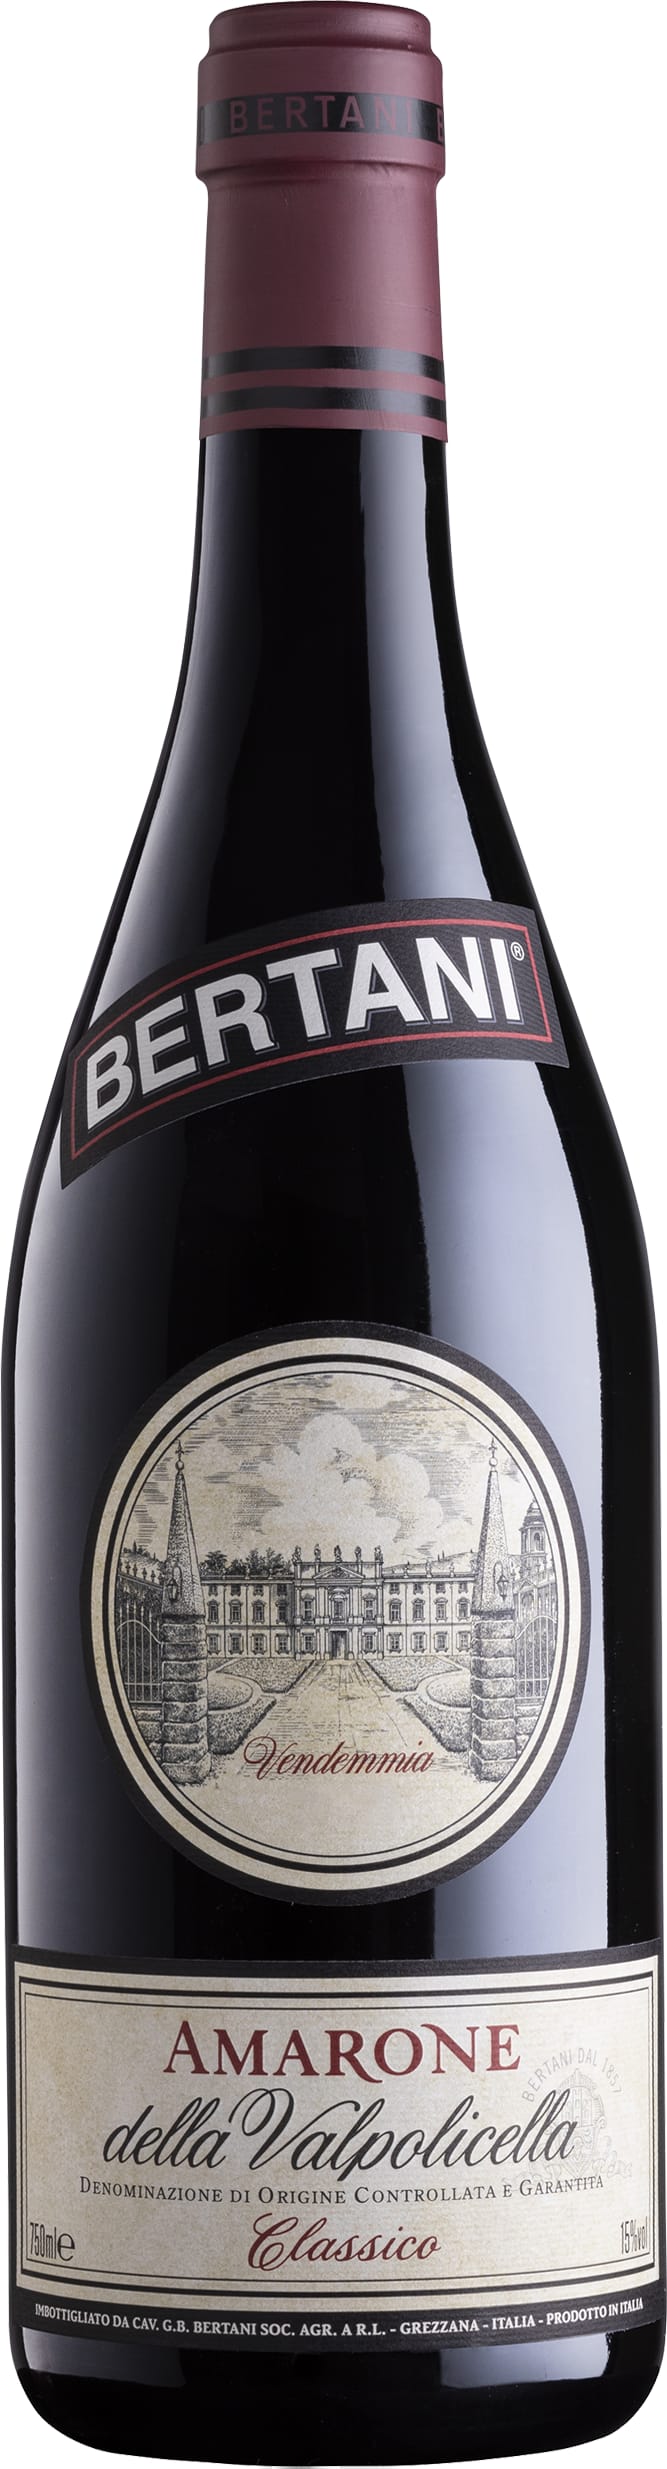 Bertani Amarone Classico 2013 75cl - Buy Bertani Wines from GREAT WINES DIRECT wine shop